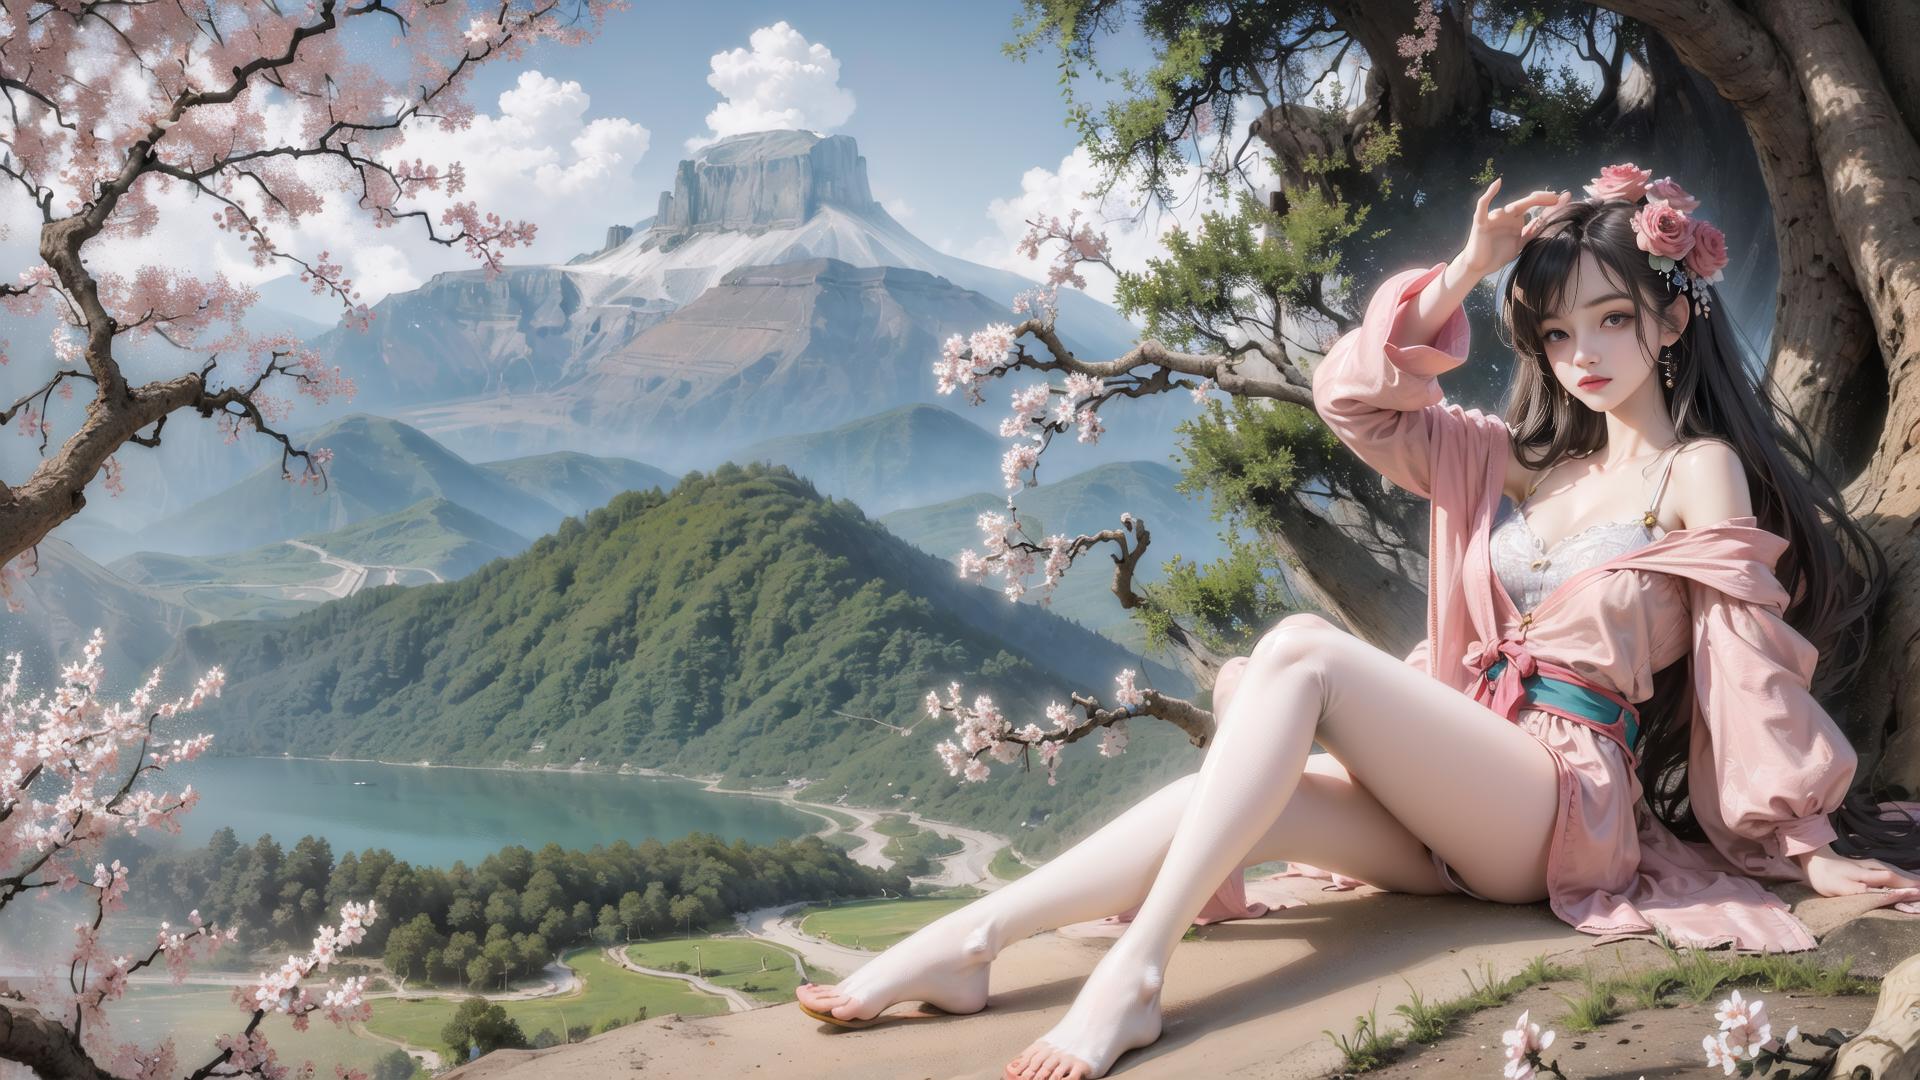 Peach blossom enhancement image by xsbp_Alex